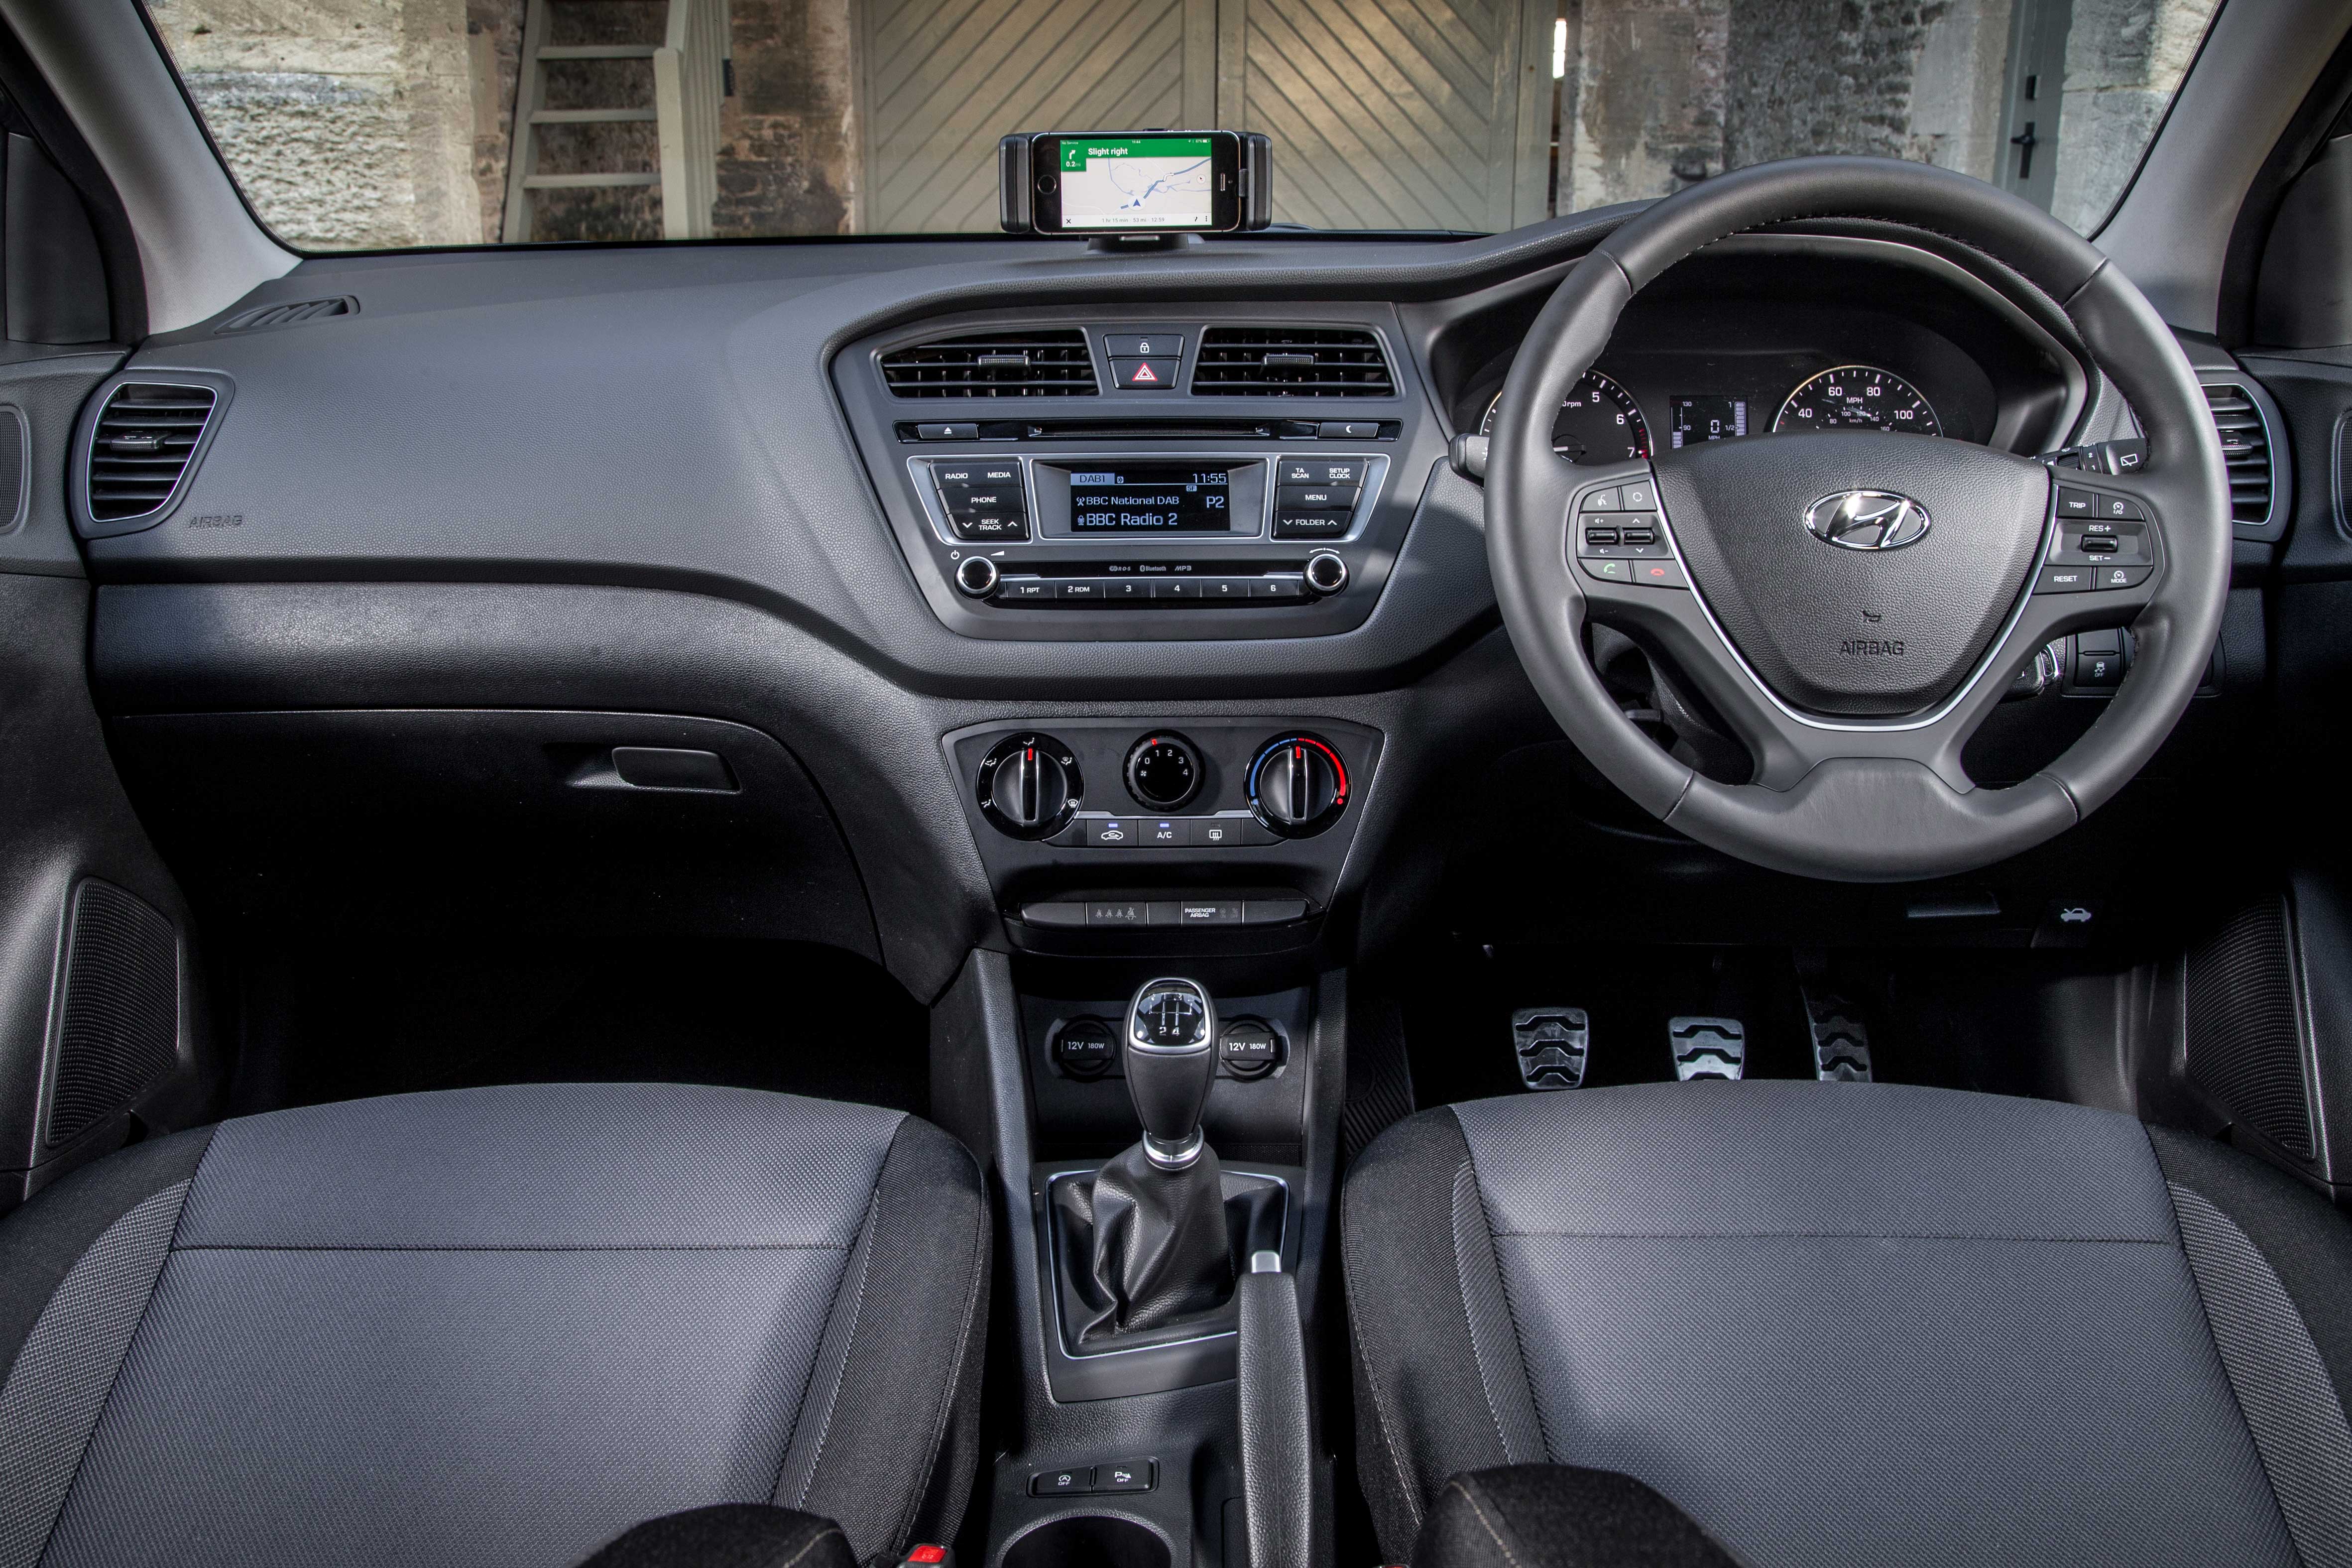 All-new 2020 Hyundai i20 interior sketch & other key details revealed